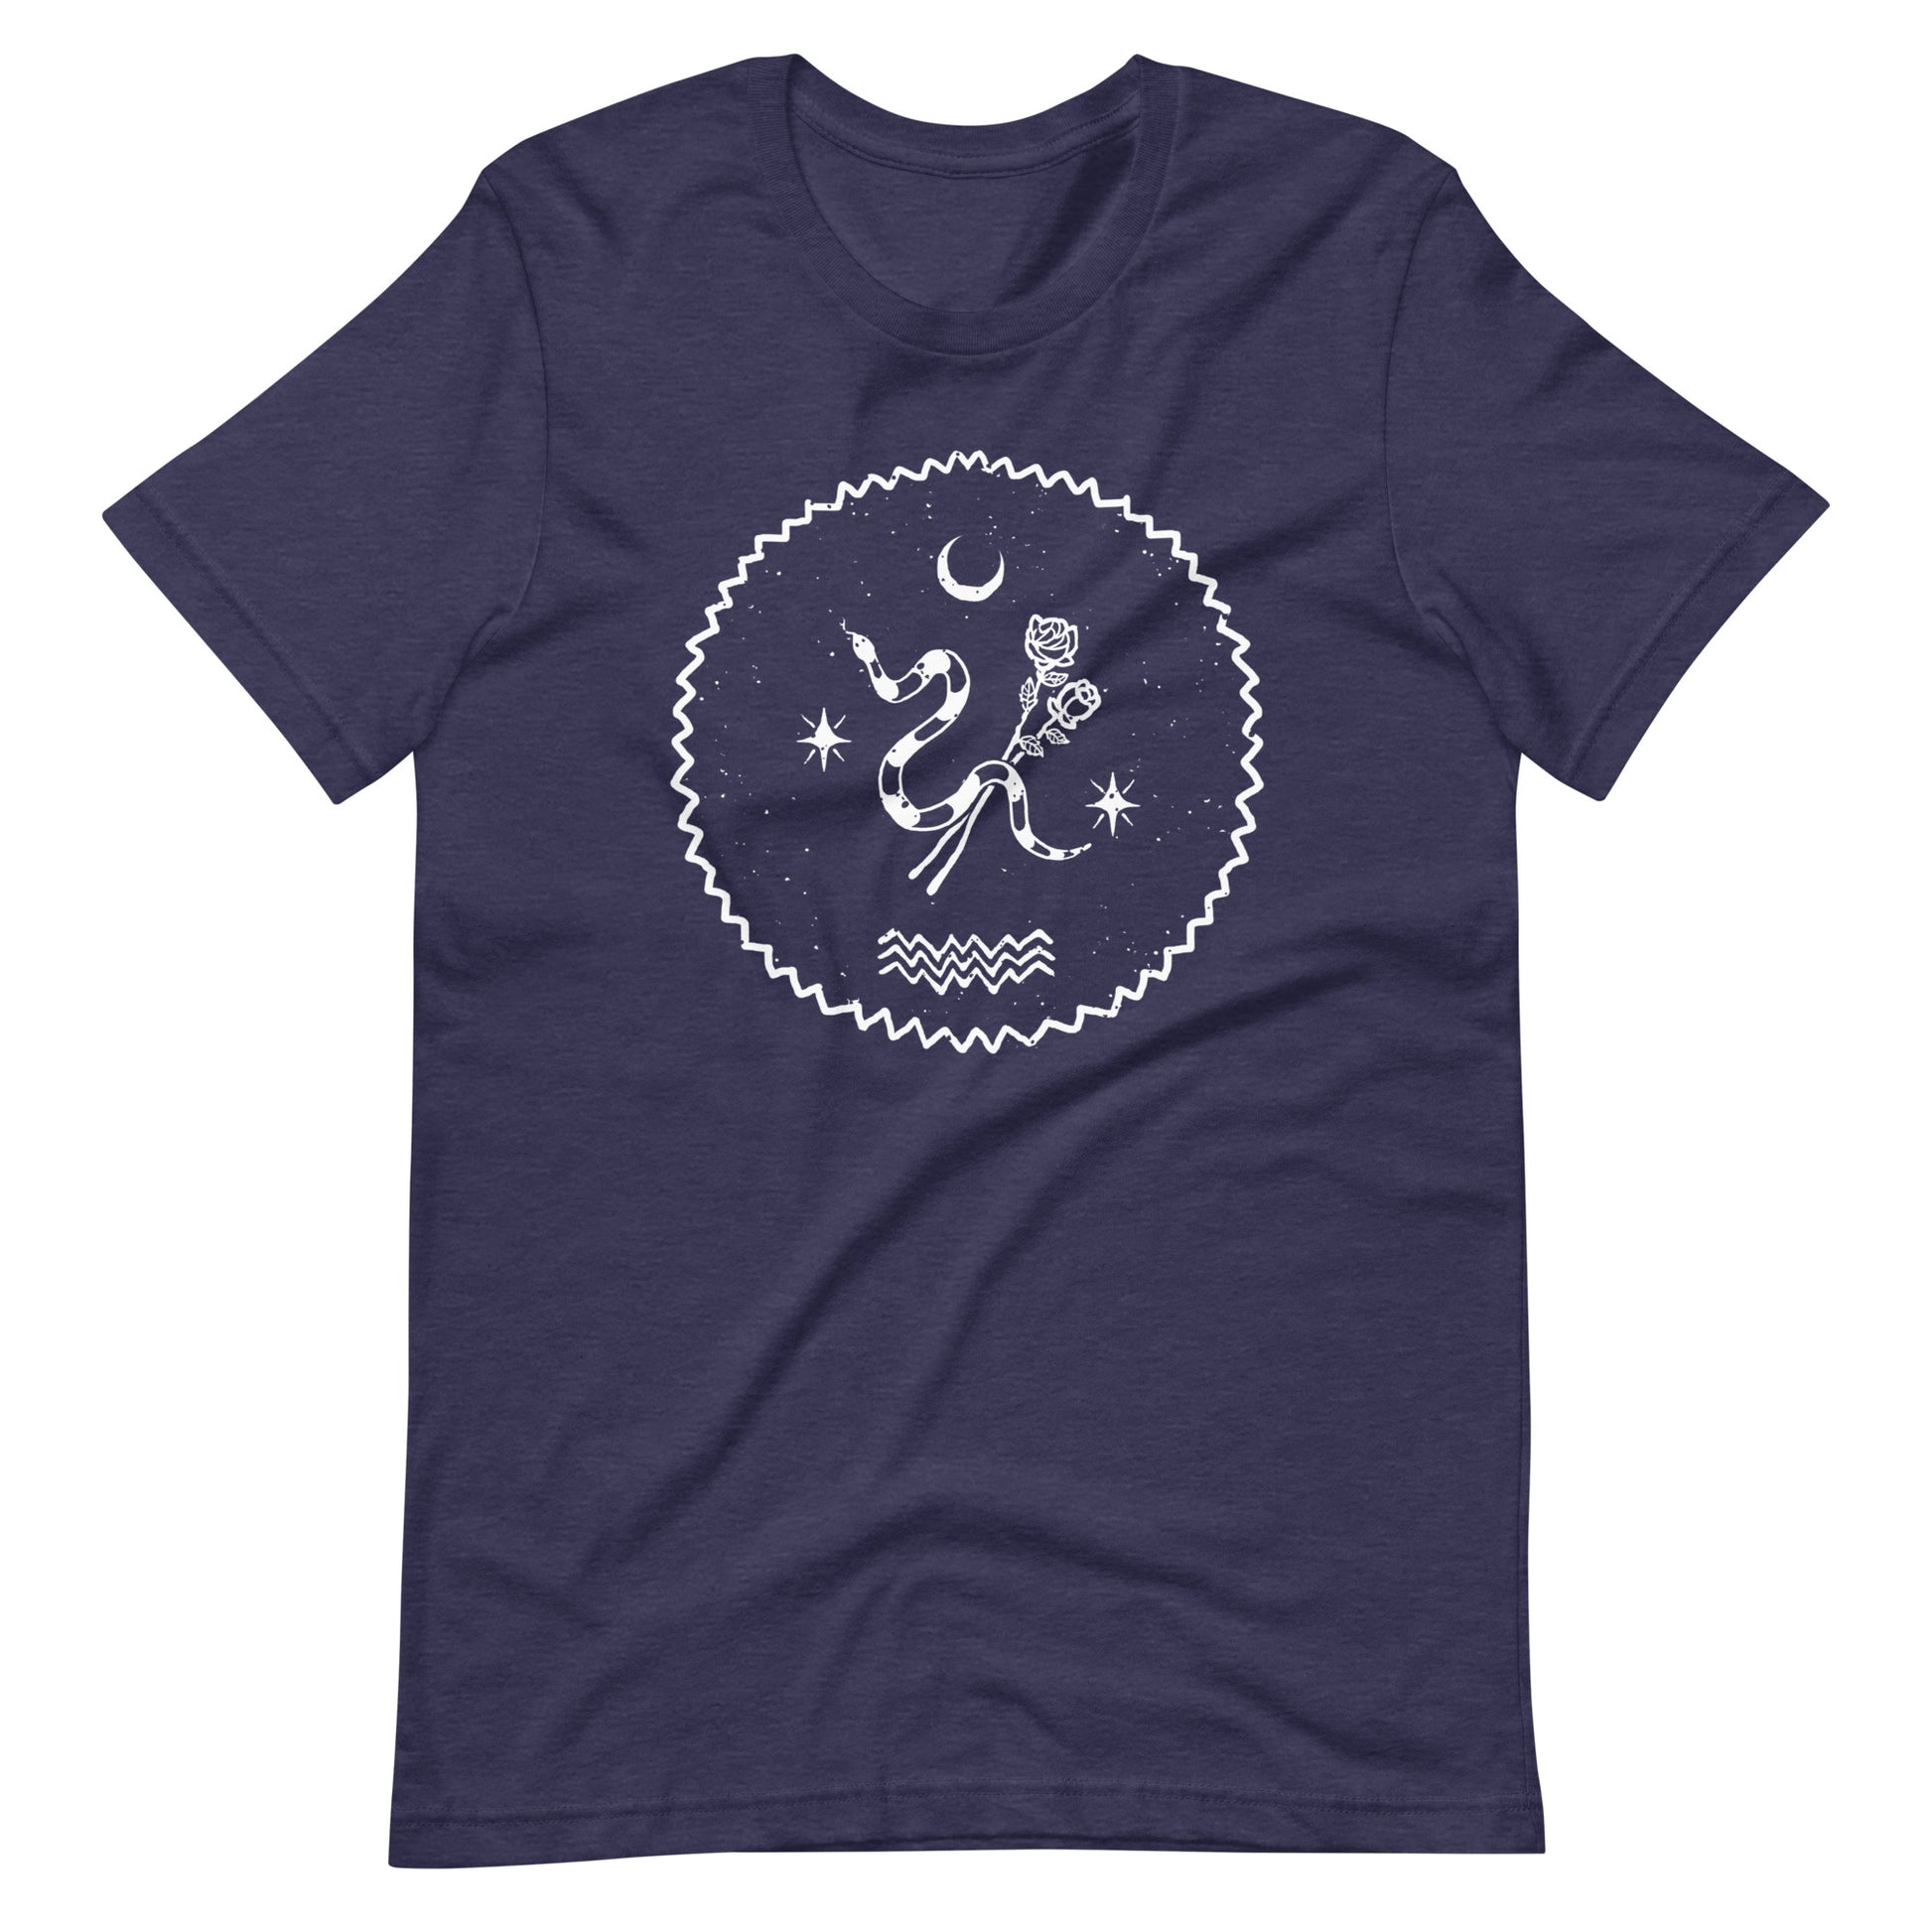 Scented Poison - Men's t-shirt - Heather Midnight Navy Front